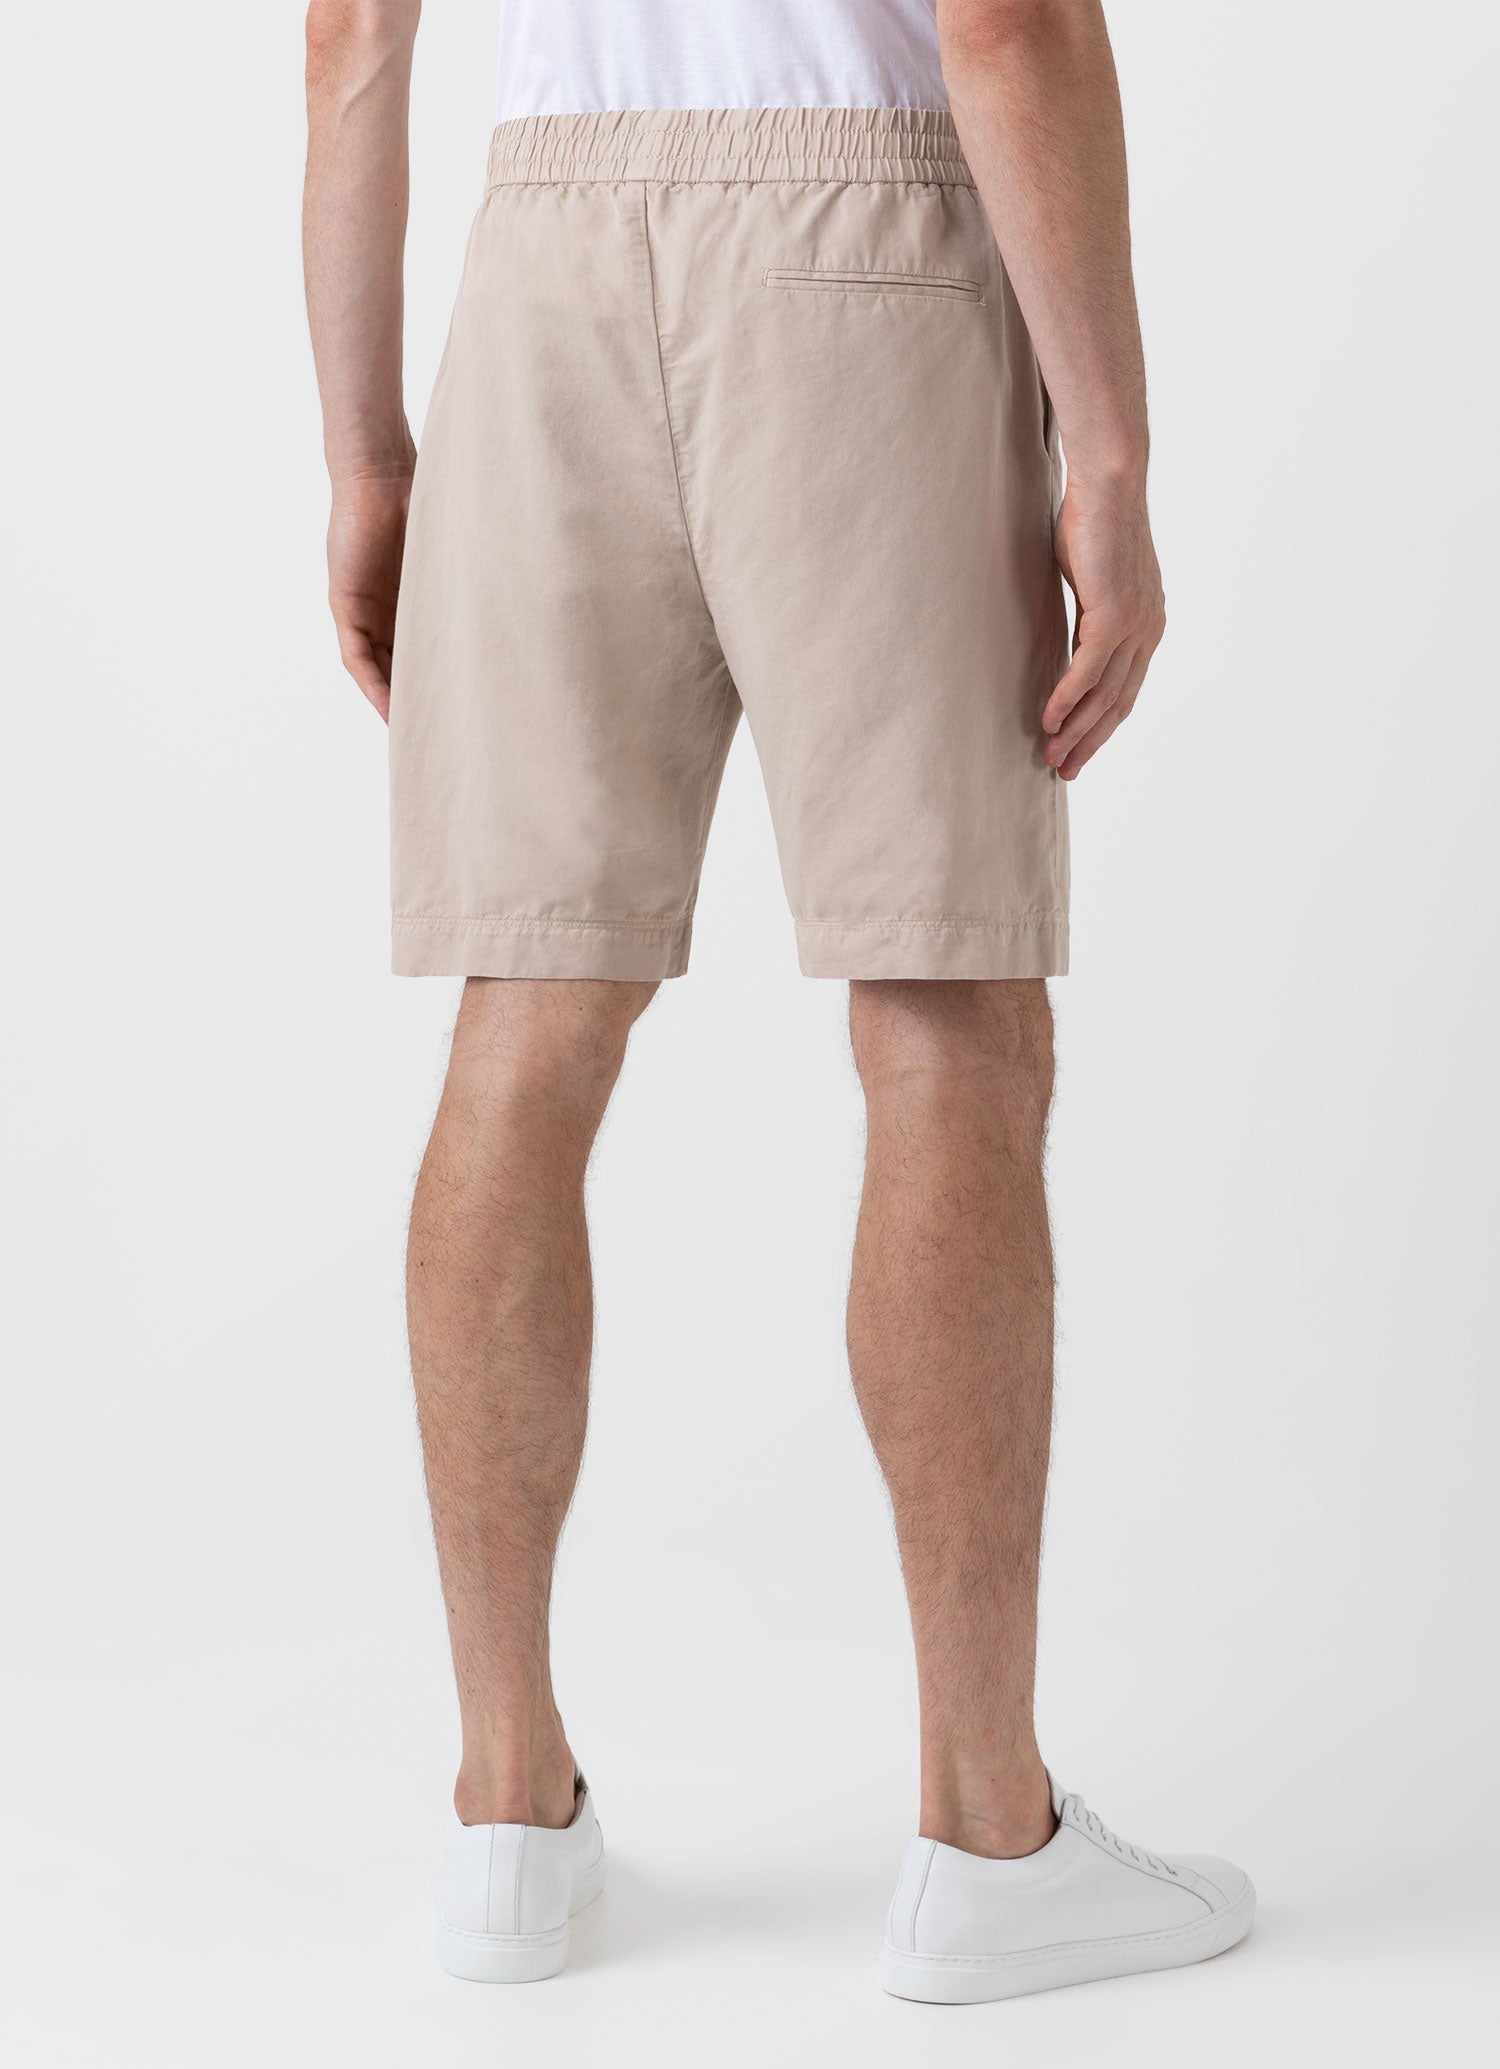 Men's Cotton Linen Drawstring Shorts in Light Sand